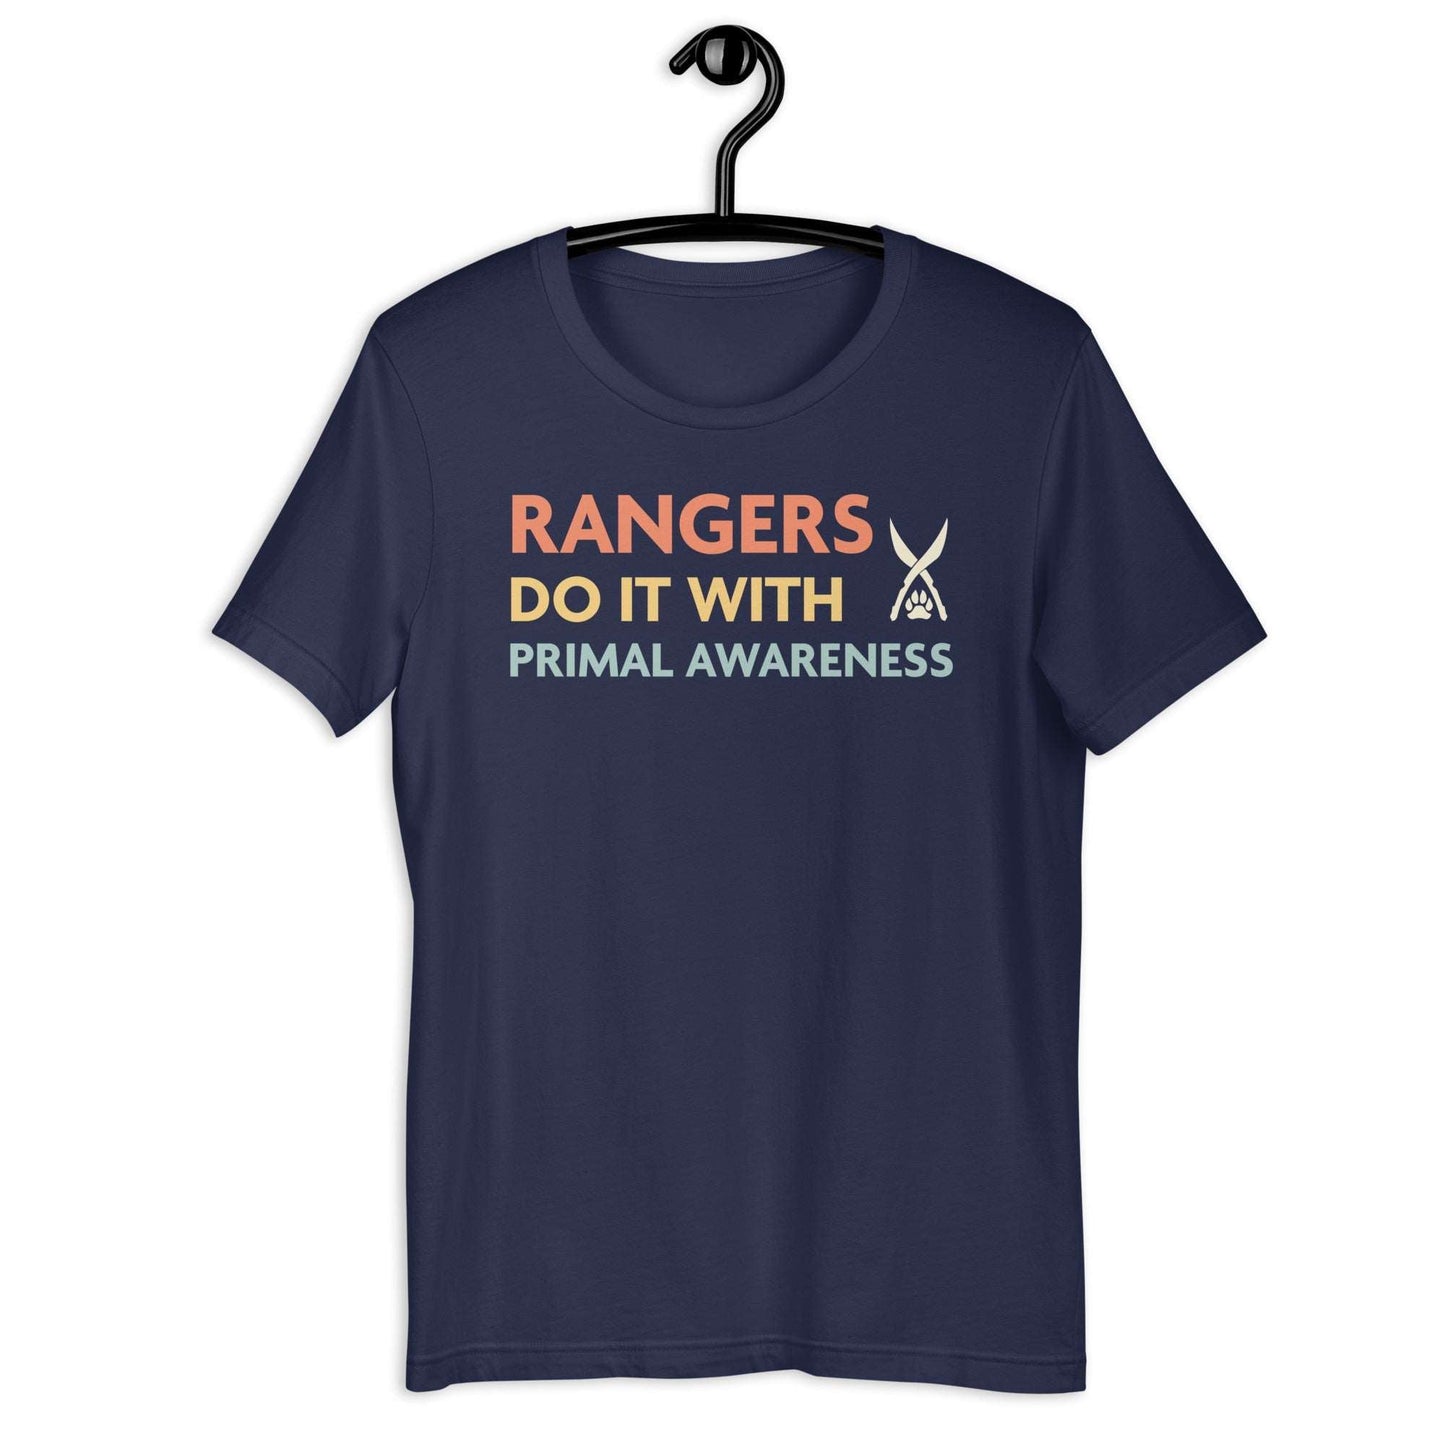 DnD Rangers Do It With Primal Awareness Shirt T-Shirt Navy / S